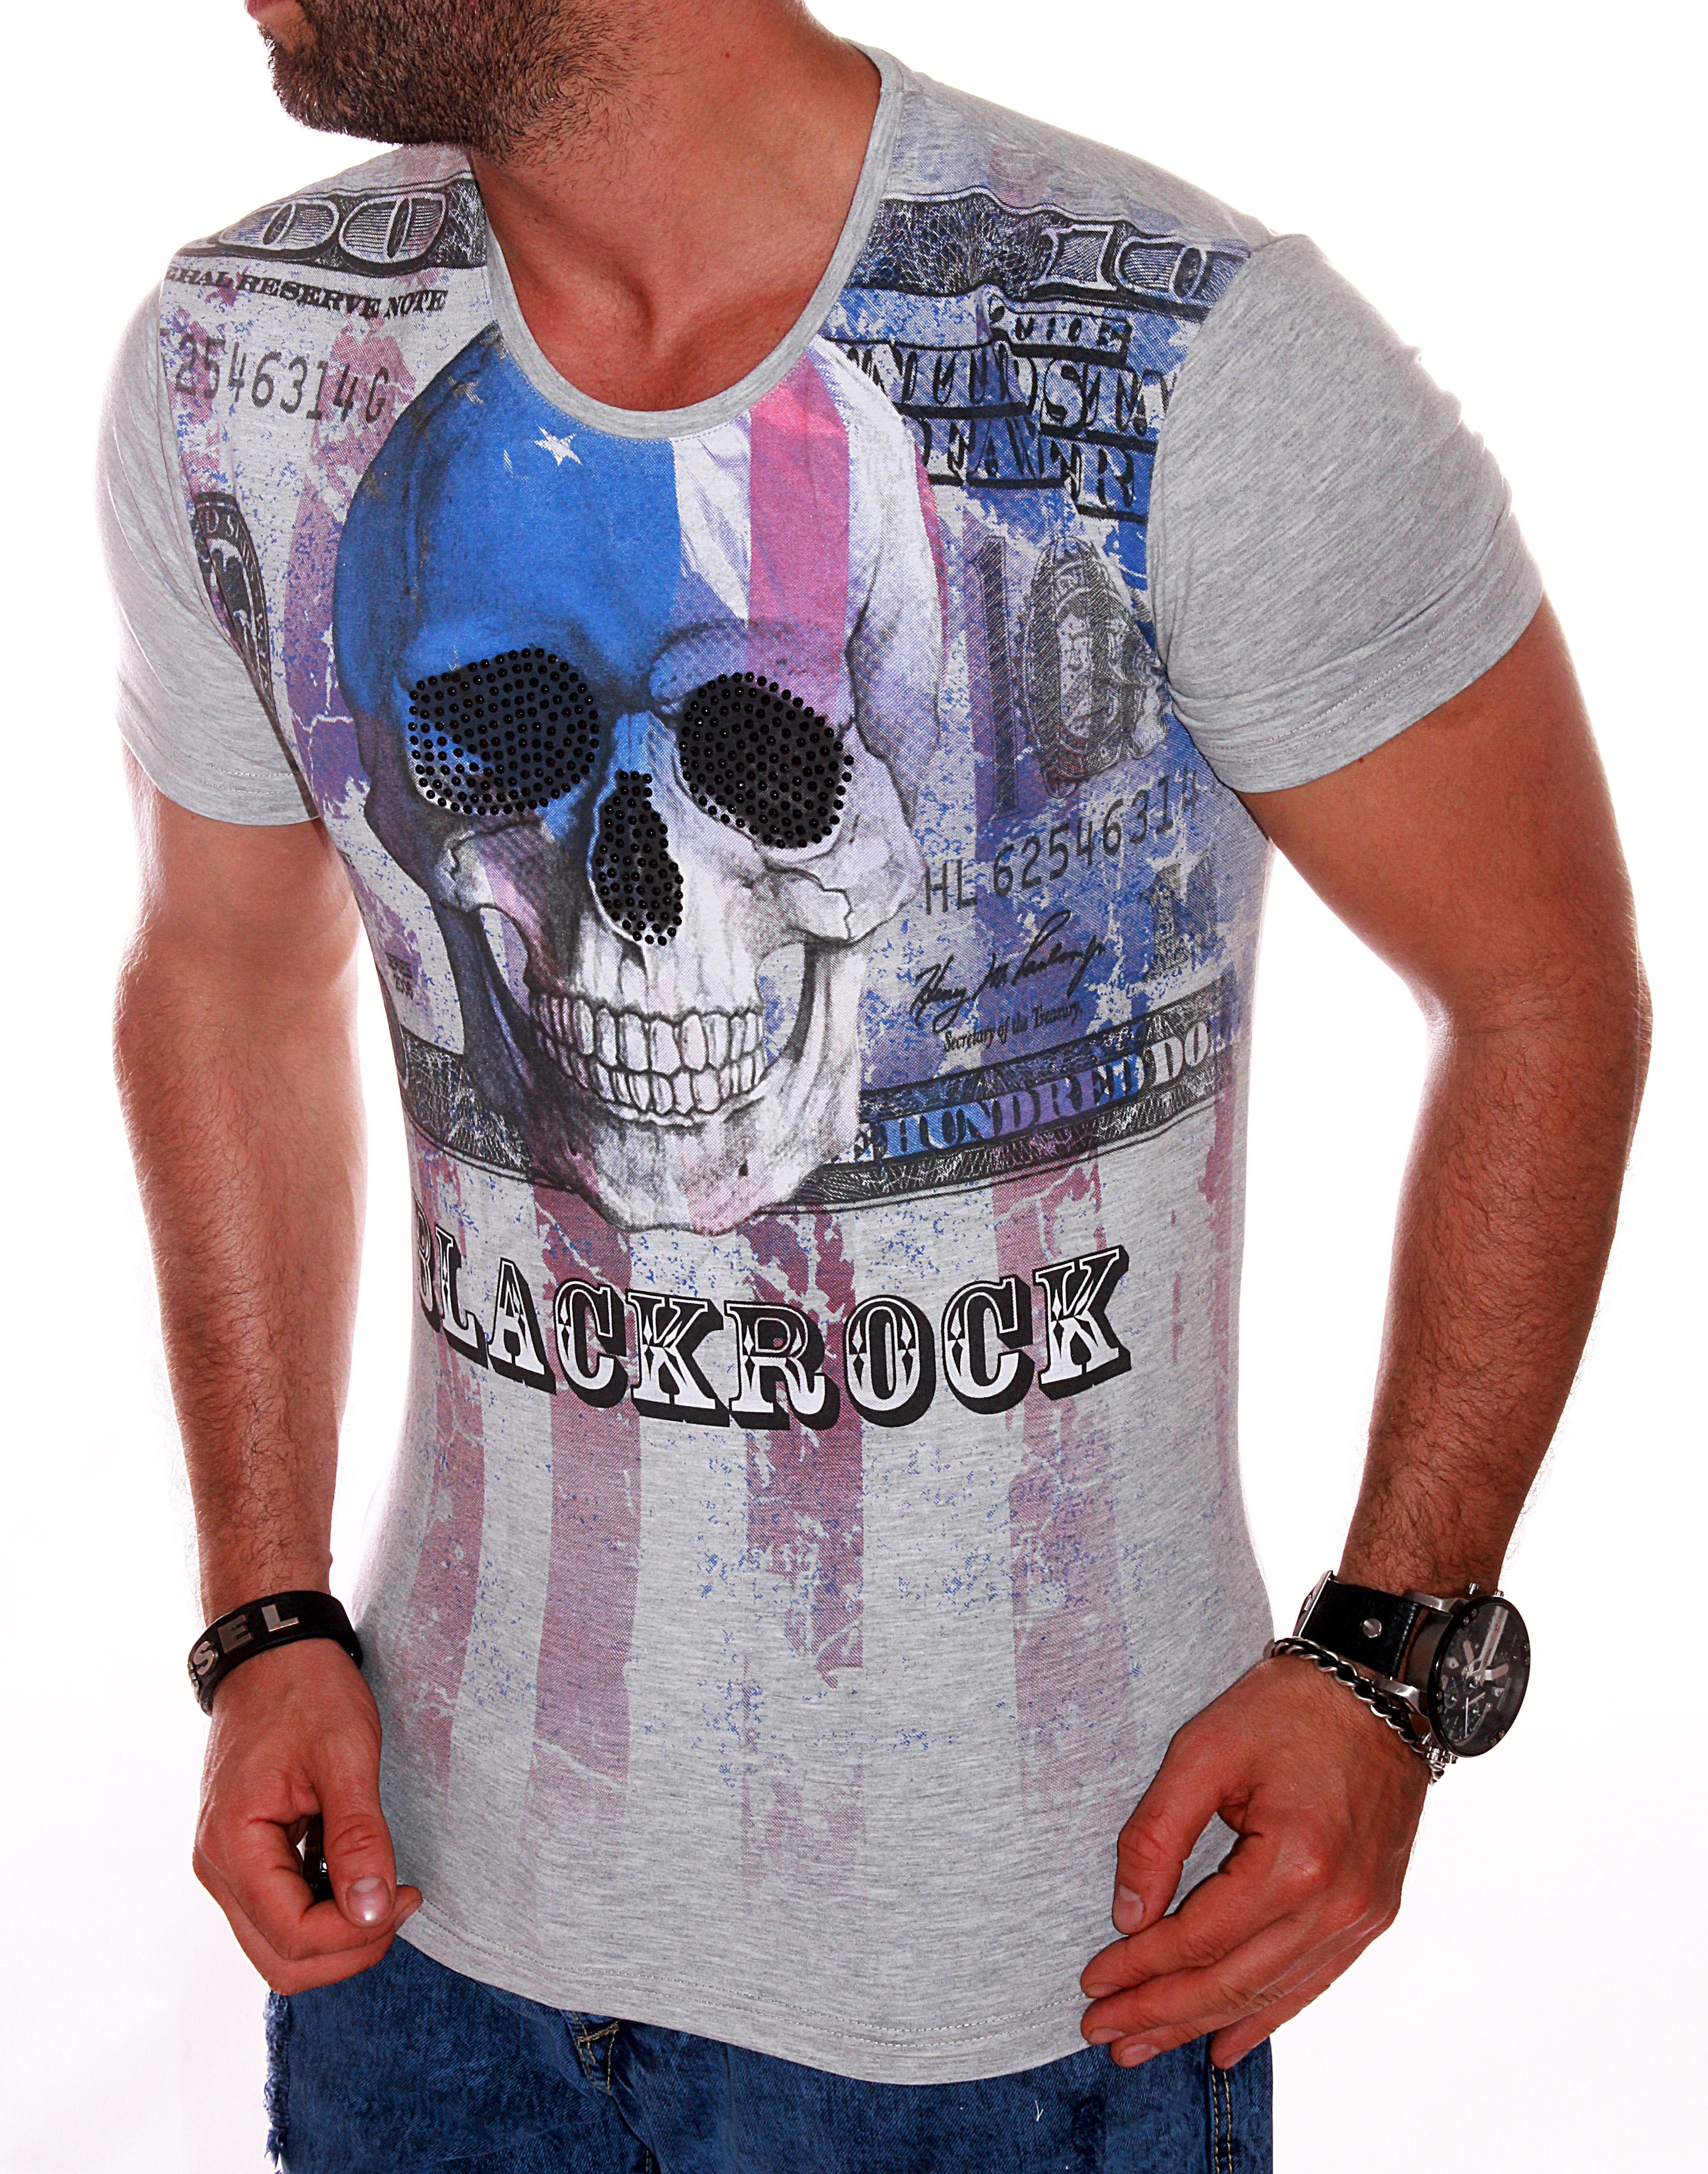 BLACKROCK T-Shirt Herren Dollar T-Shirt Totenkopf Motiv Freizeit-Shirt Grau Skull mit